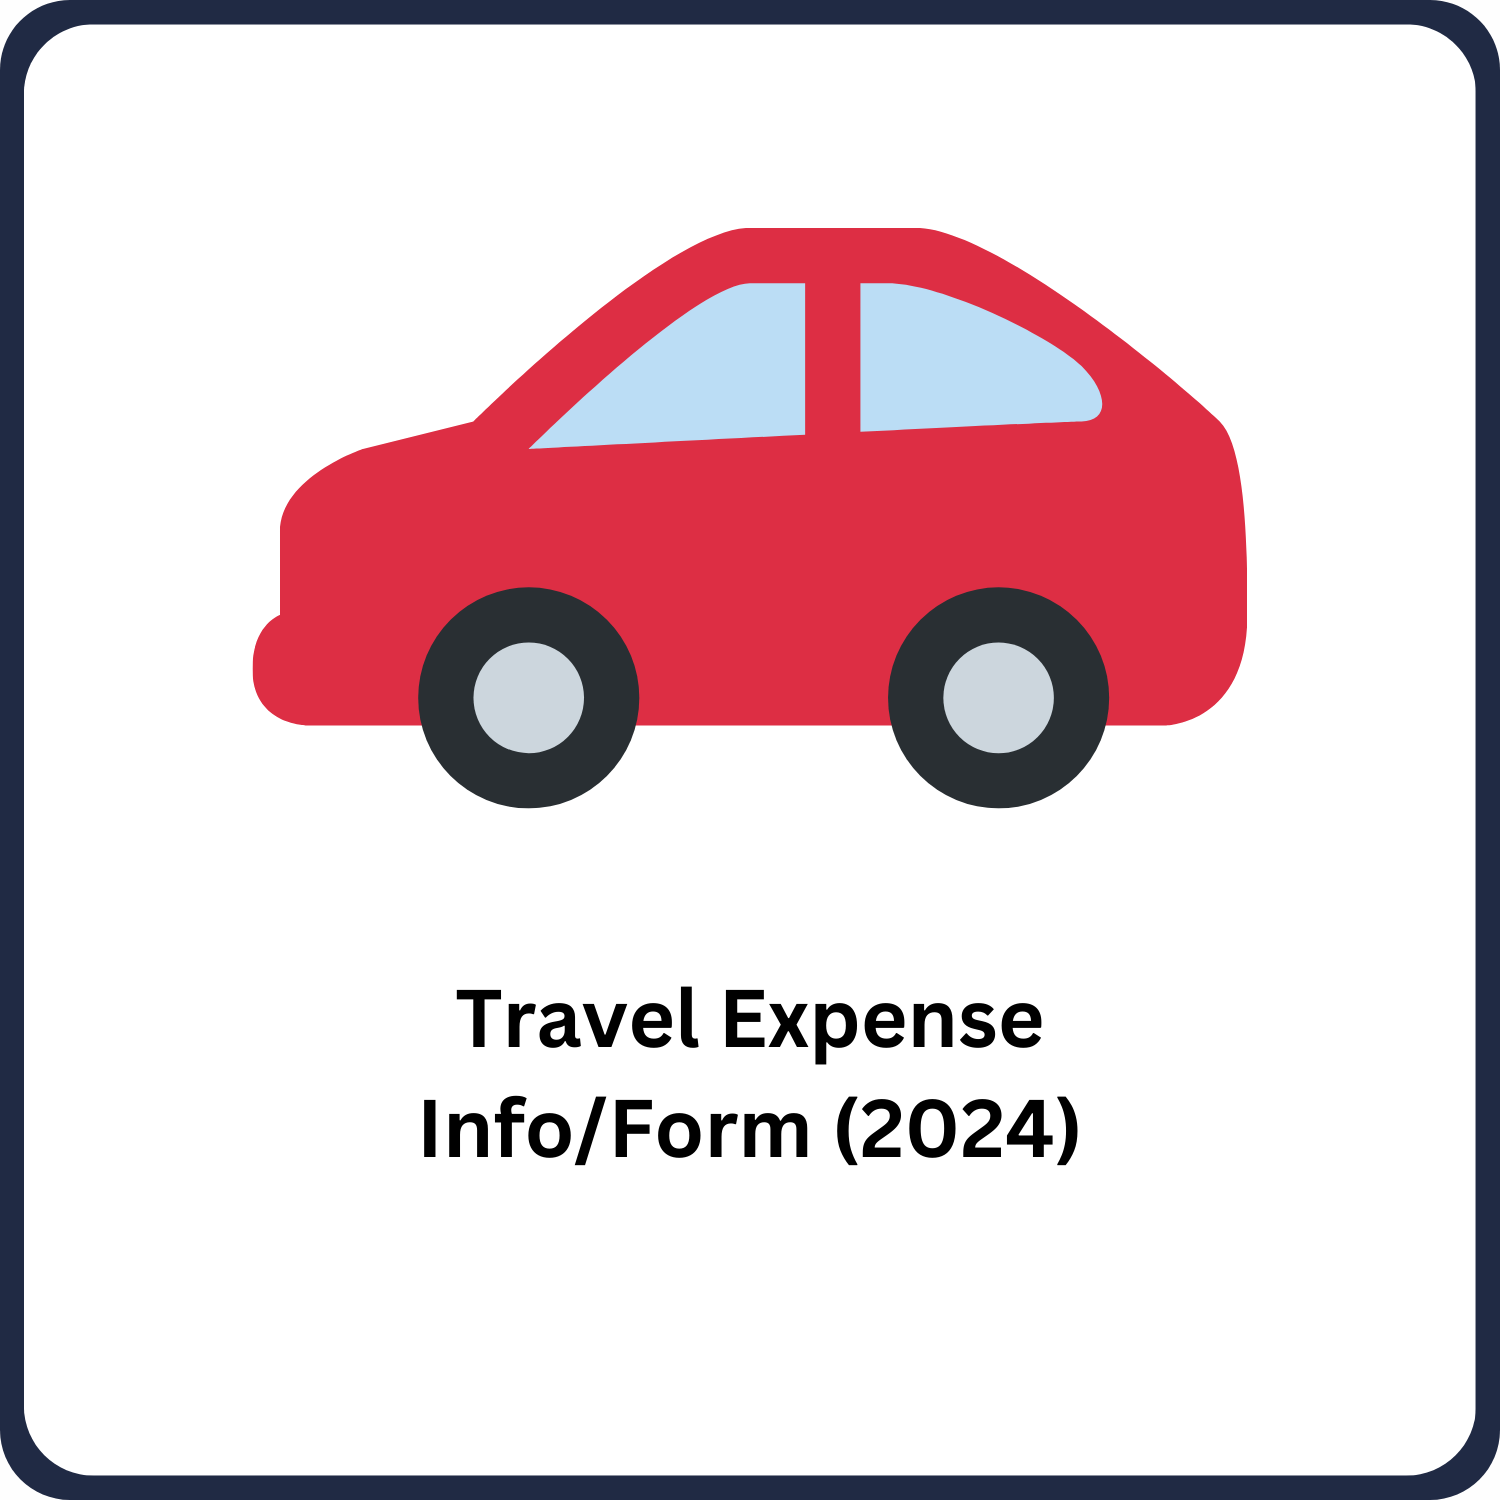 Travel Expense Info/Form (2024)